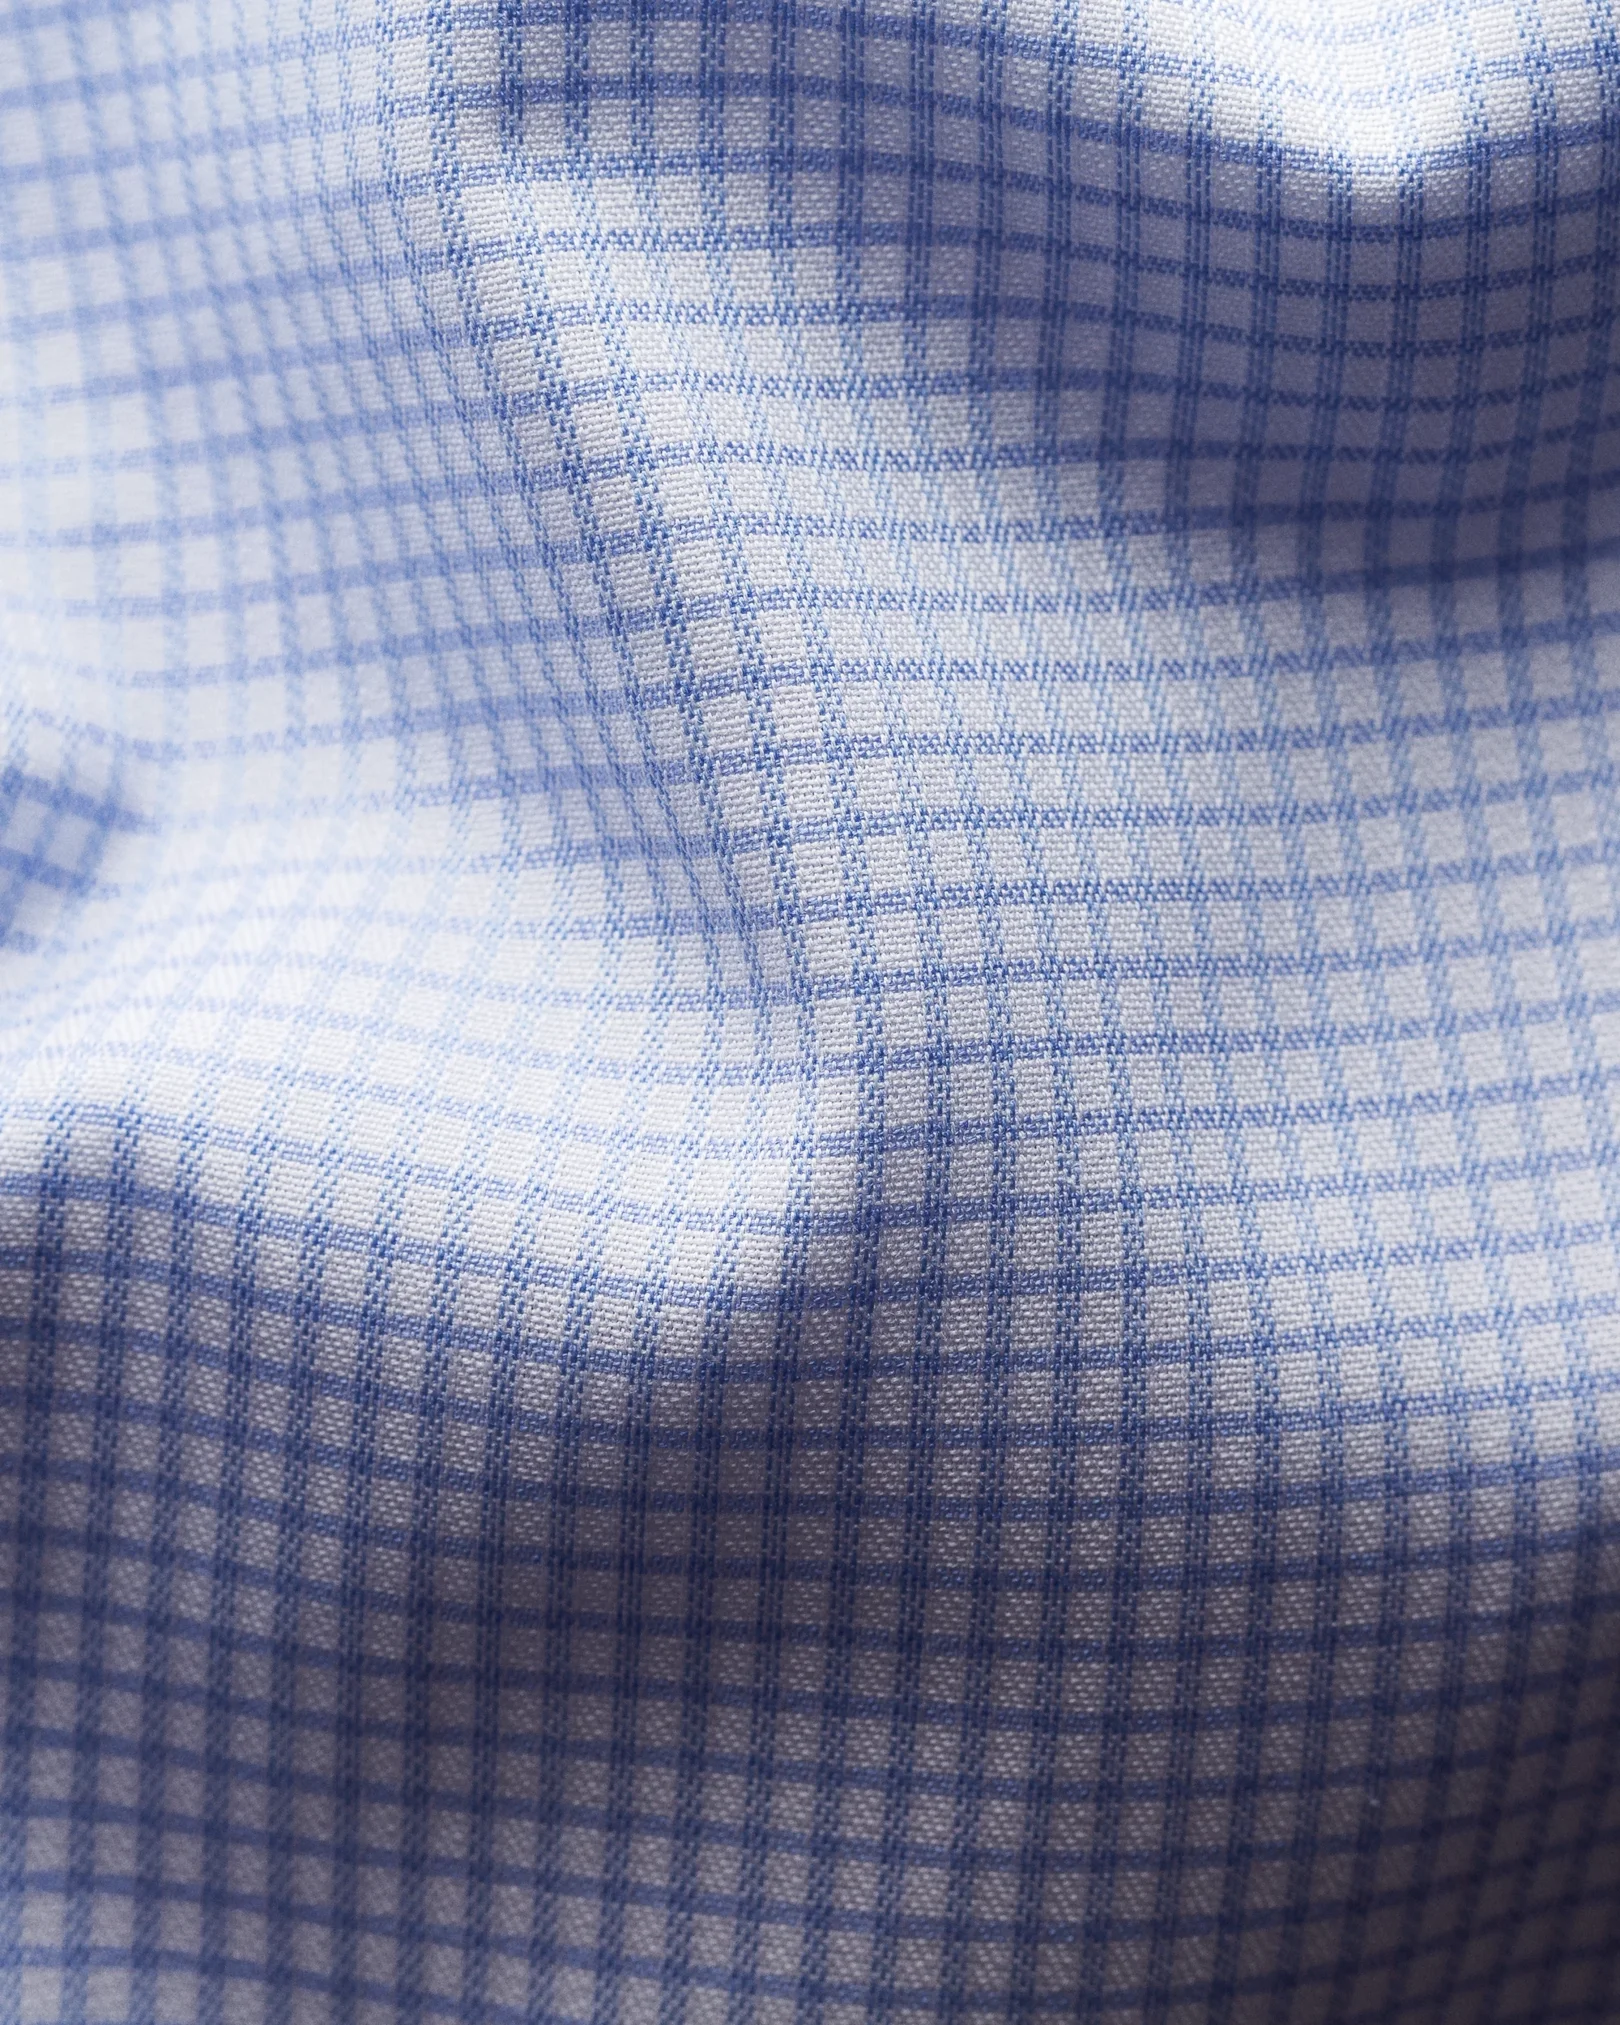 Eton - light blue micro check stretch shirt extreme cut away collar